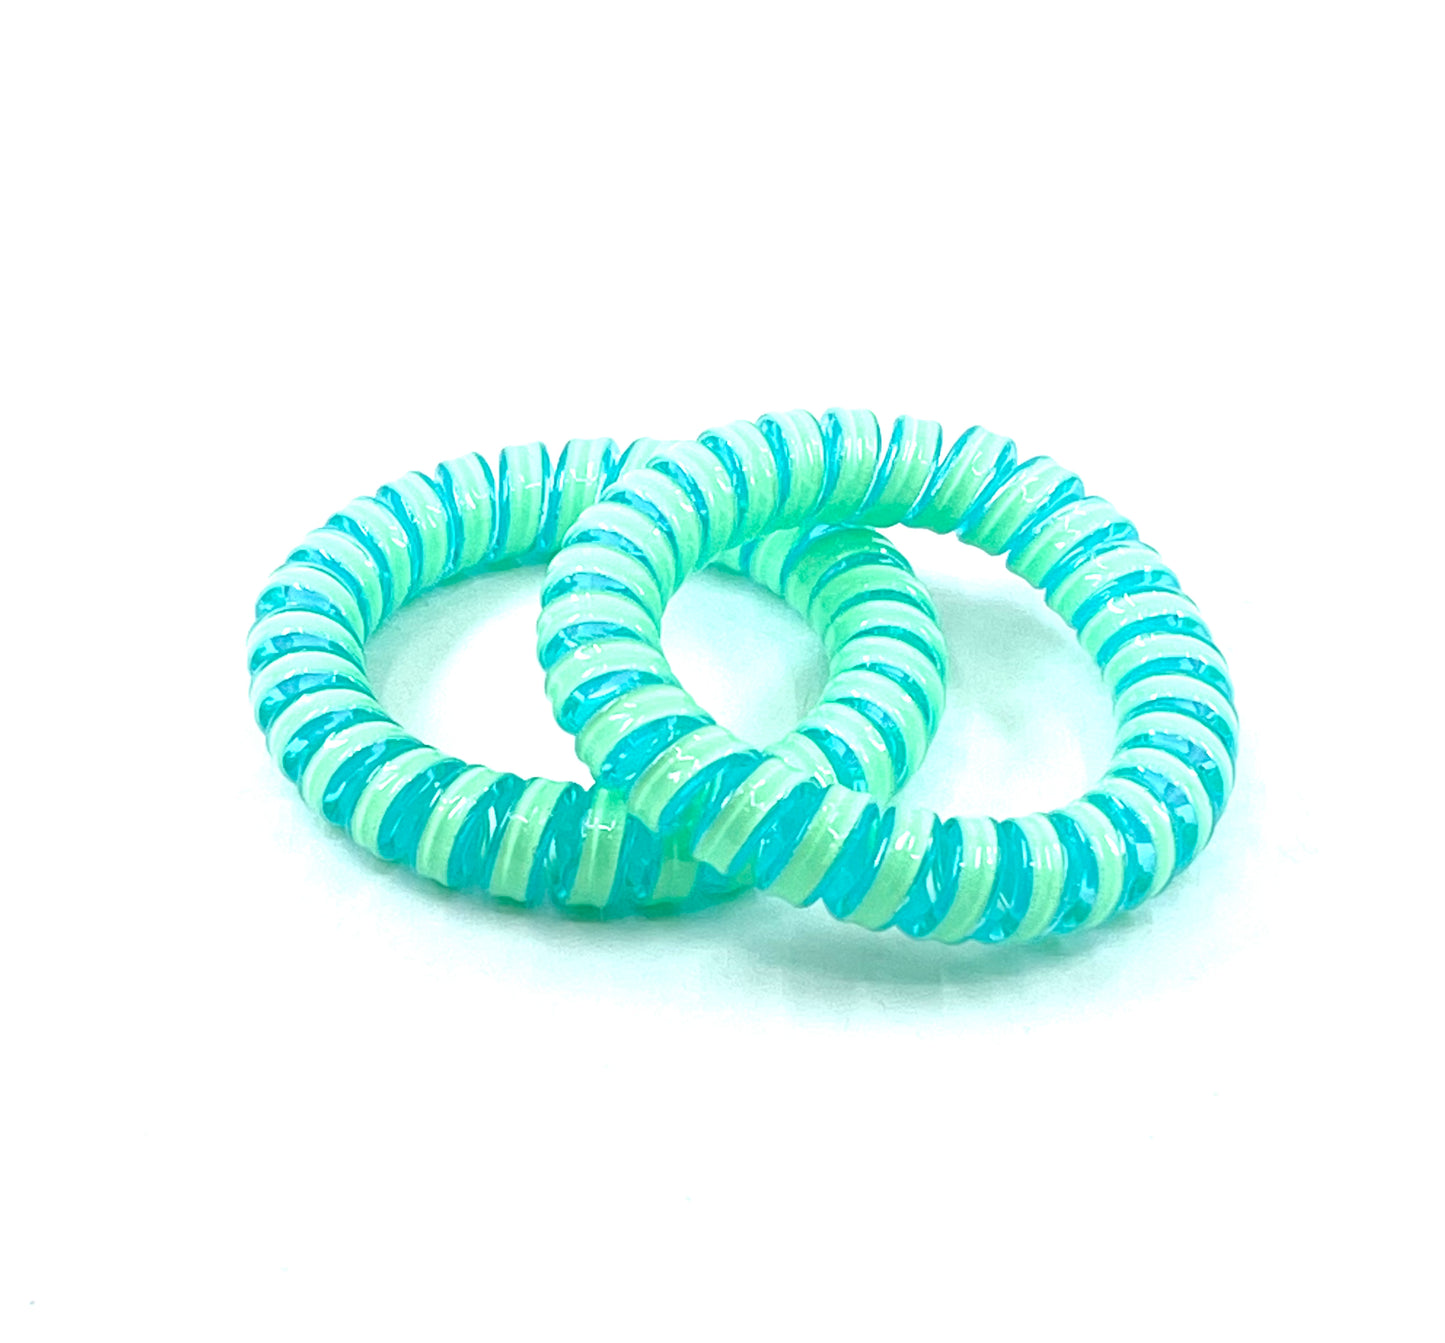 Large Spiral Hair Ties - green/blue